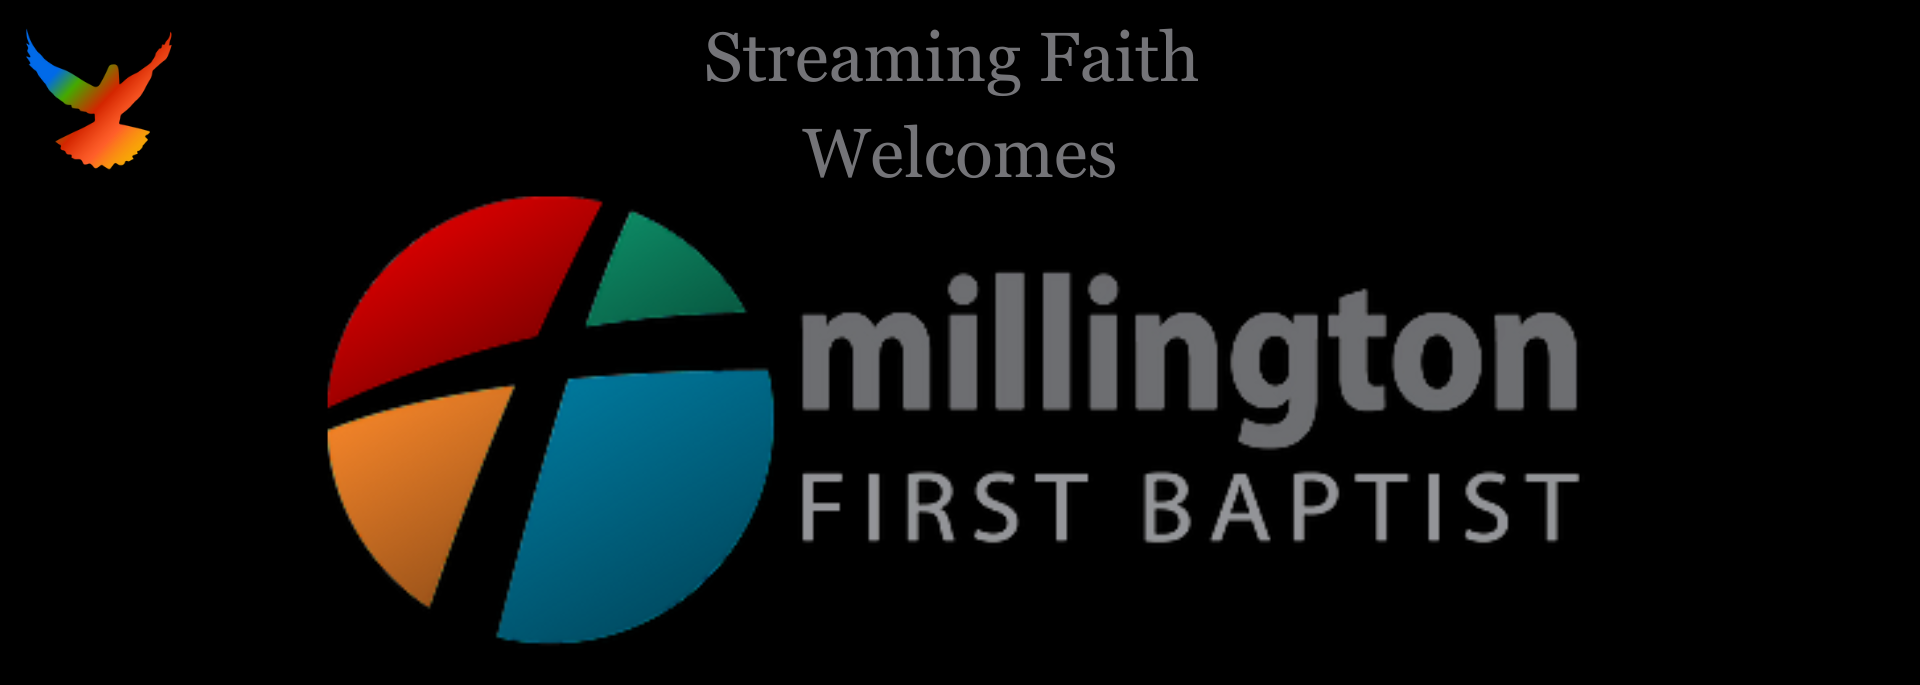 Welcome FBC Millington